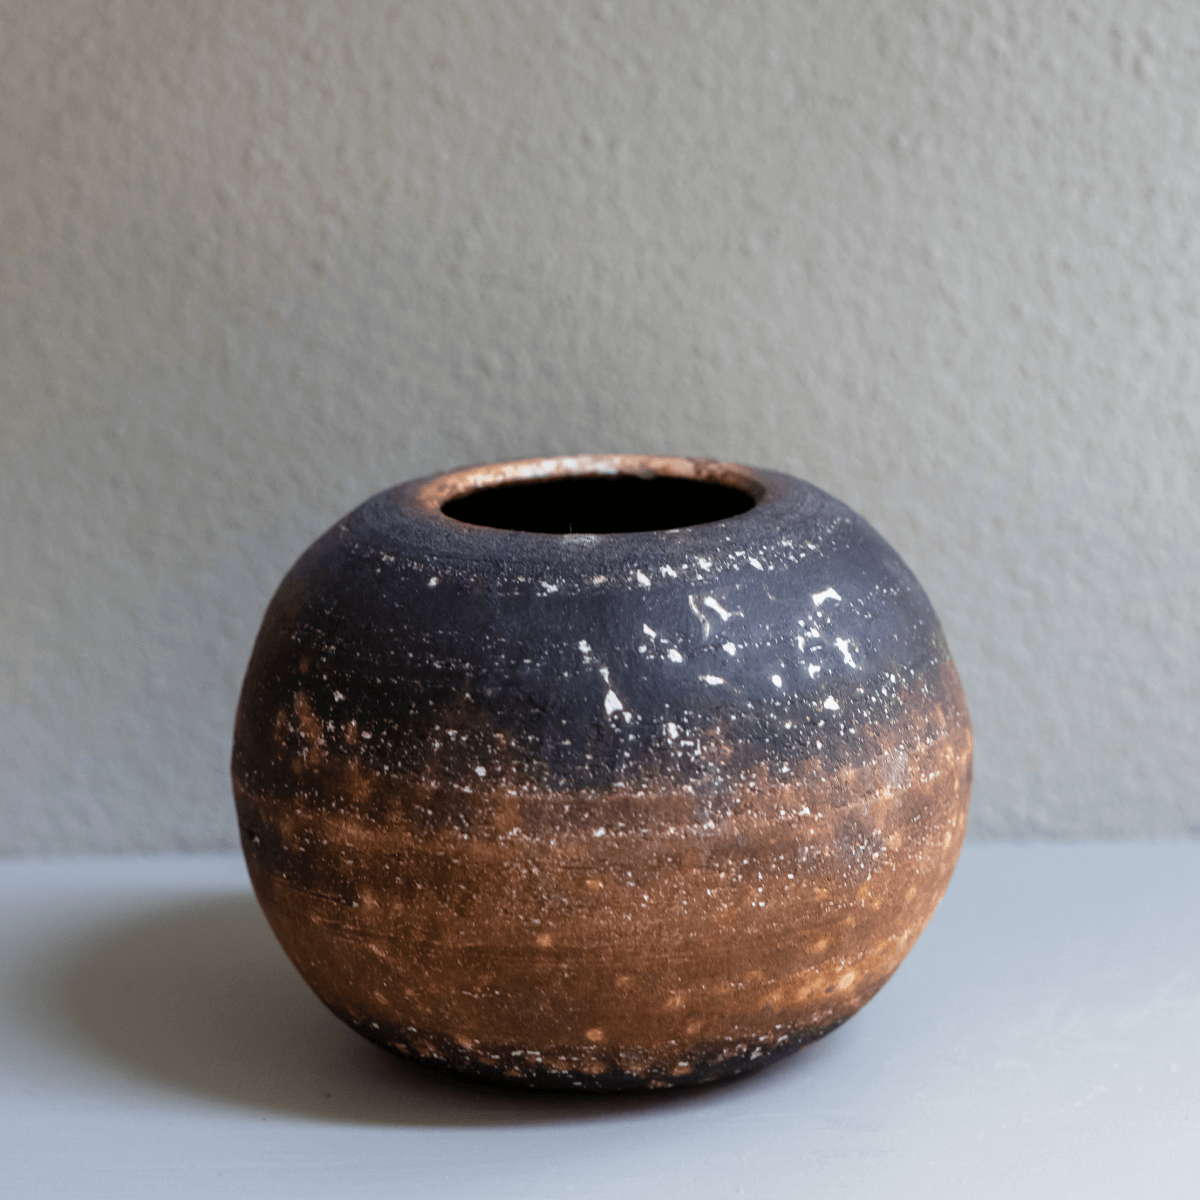 Small Round Bud Vase